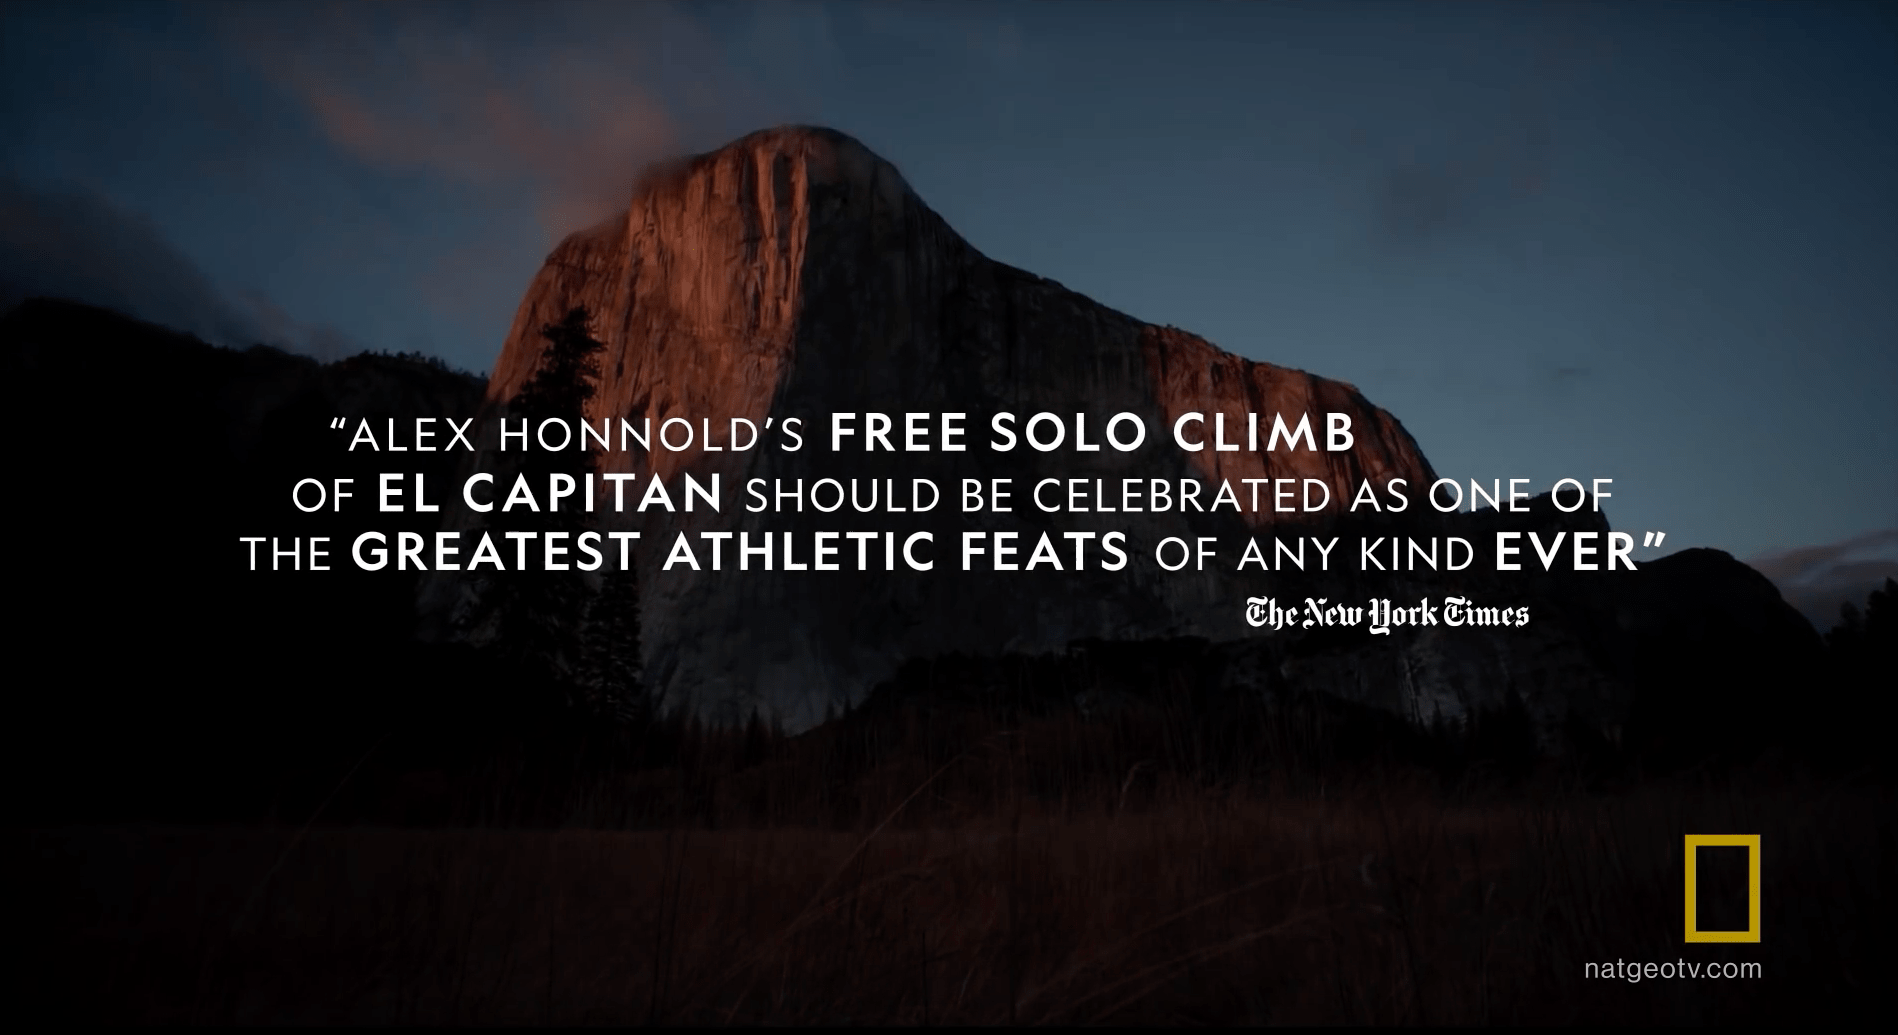 Alex honnold, El Capitan, solo climb, jimmy chin, movie trailer